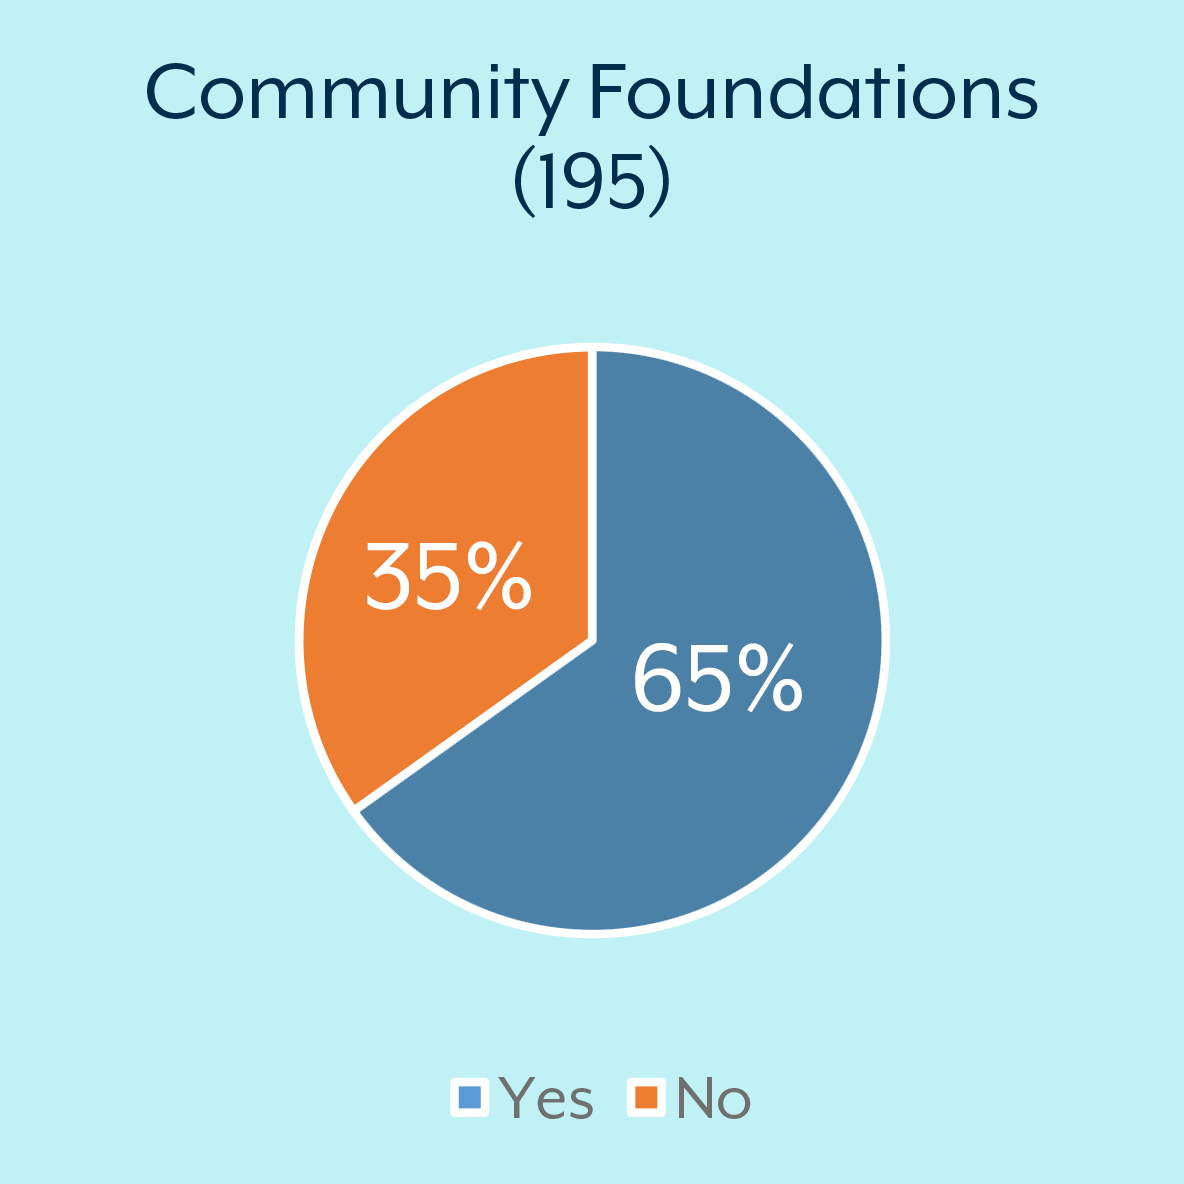 Community Foundations: Yes 65% No 35%